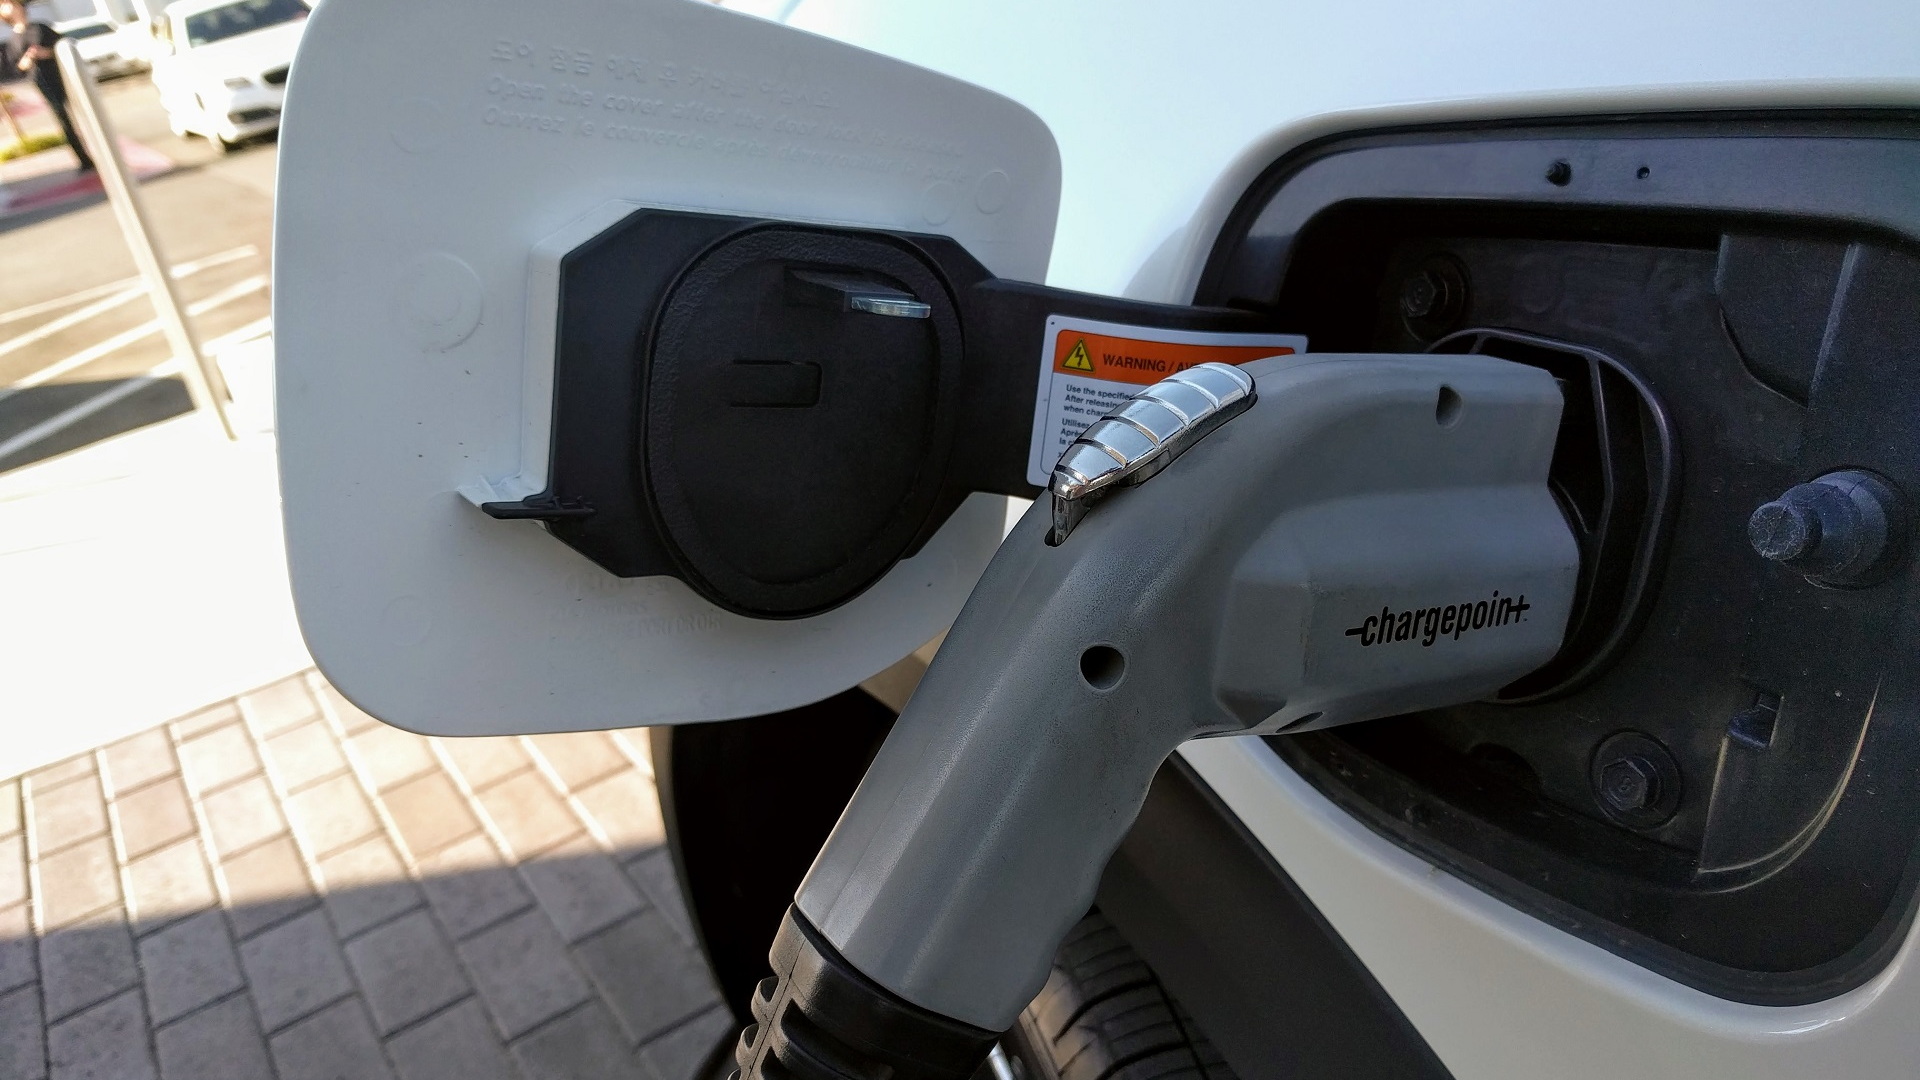 2018 Kia Niro Plug-In Hybrid charging at Crevier BMW, Santa Ana, California, Dec 2017